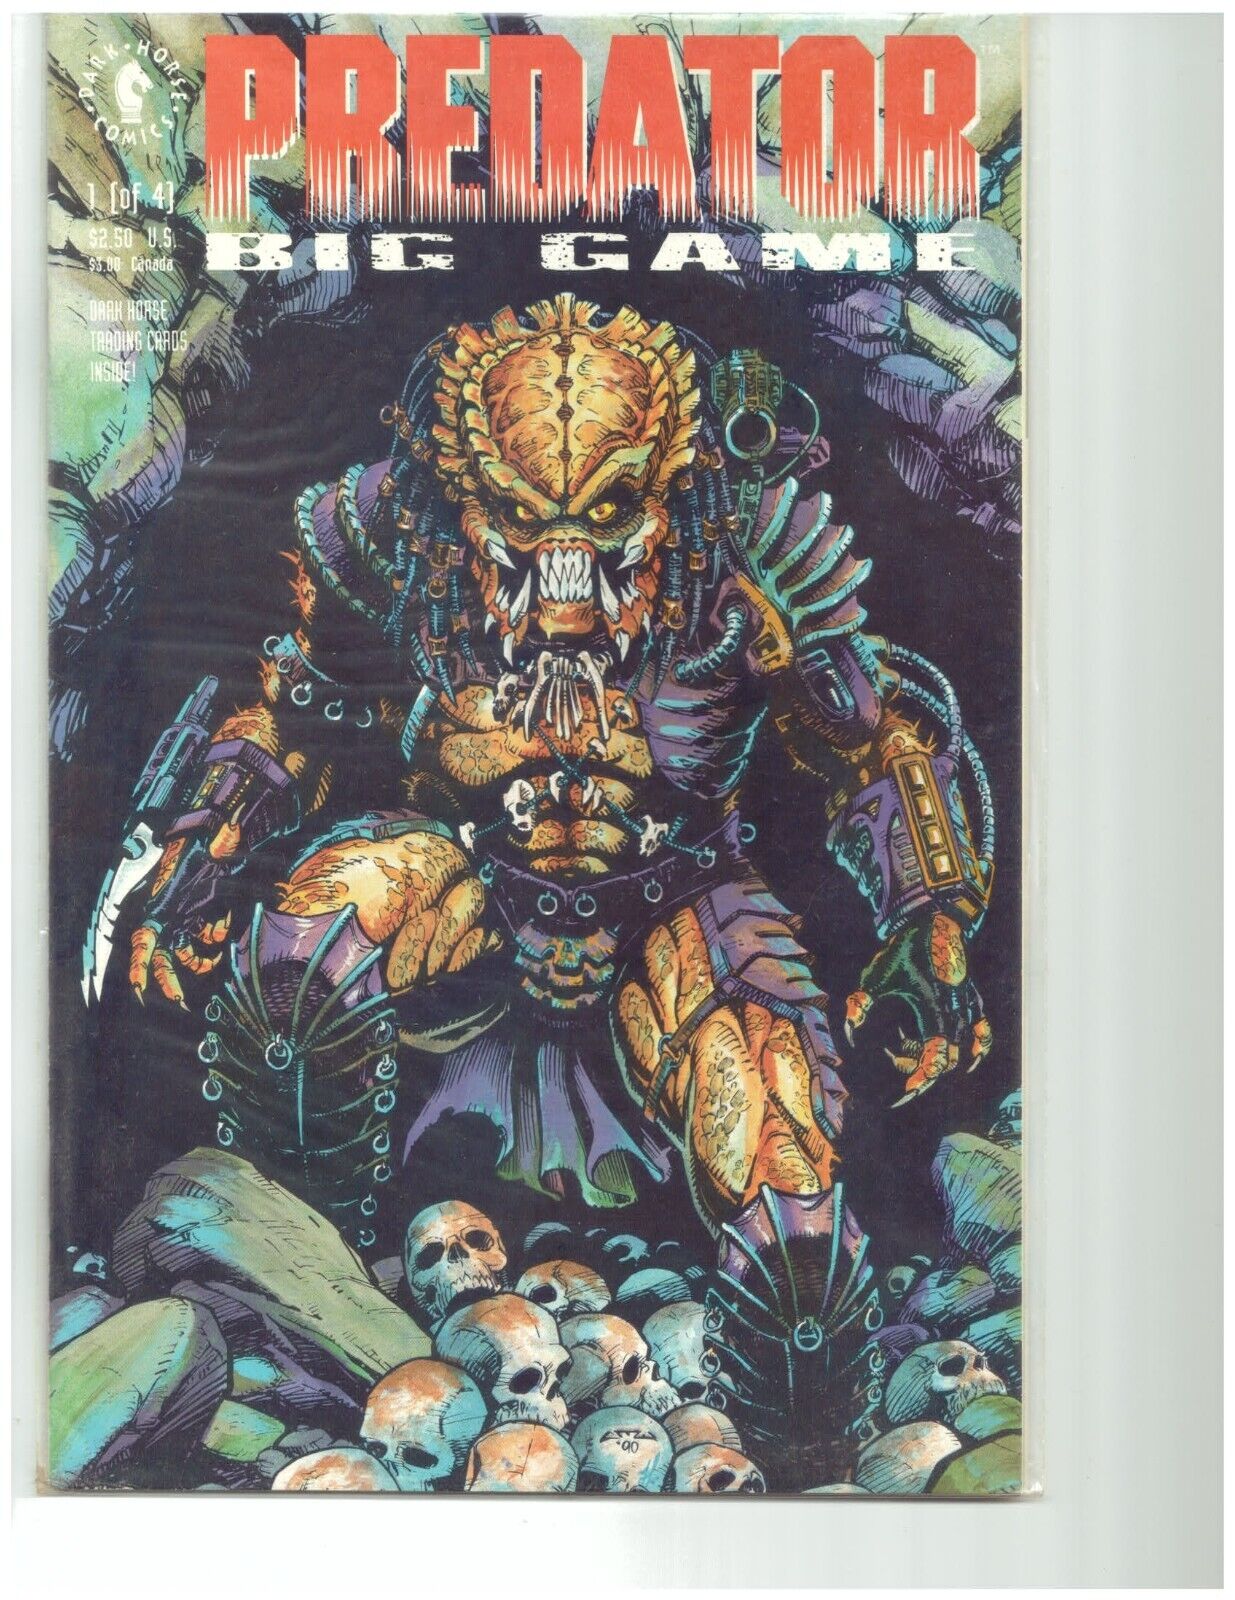 Predator: Big Game #1 - #4 (4 books, Dark Horse Comics March 1991)